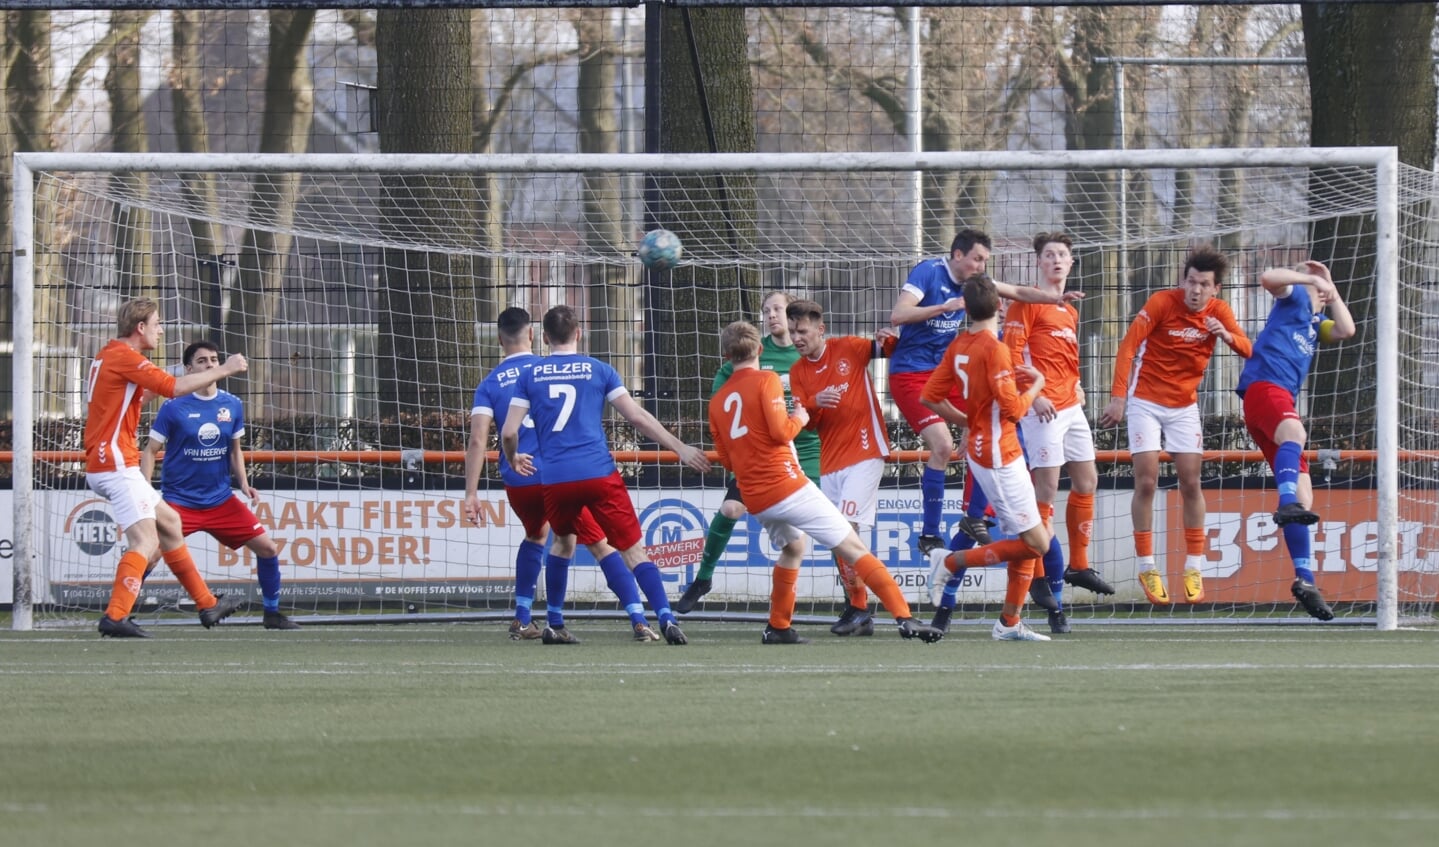 Olympia'18 verloor met 3-0 van Prinses Irene in Nistelrode. 